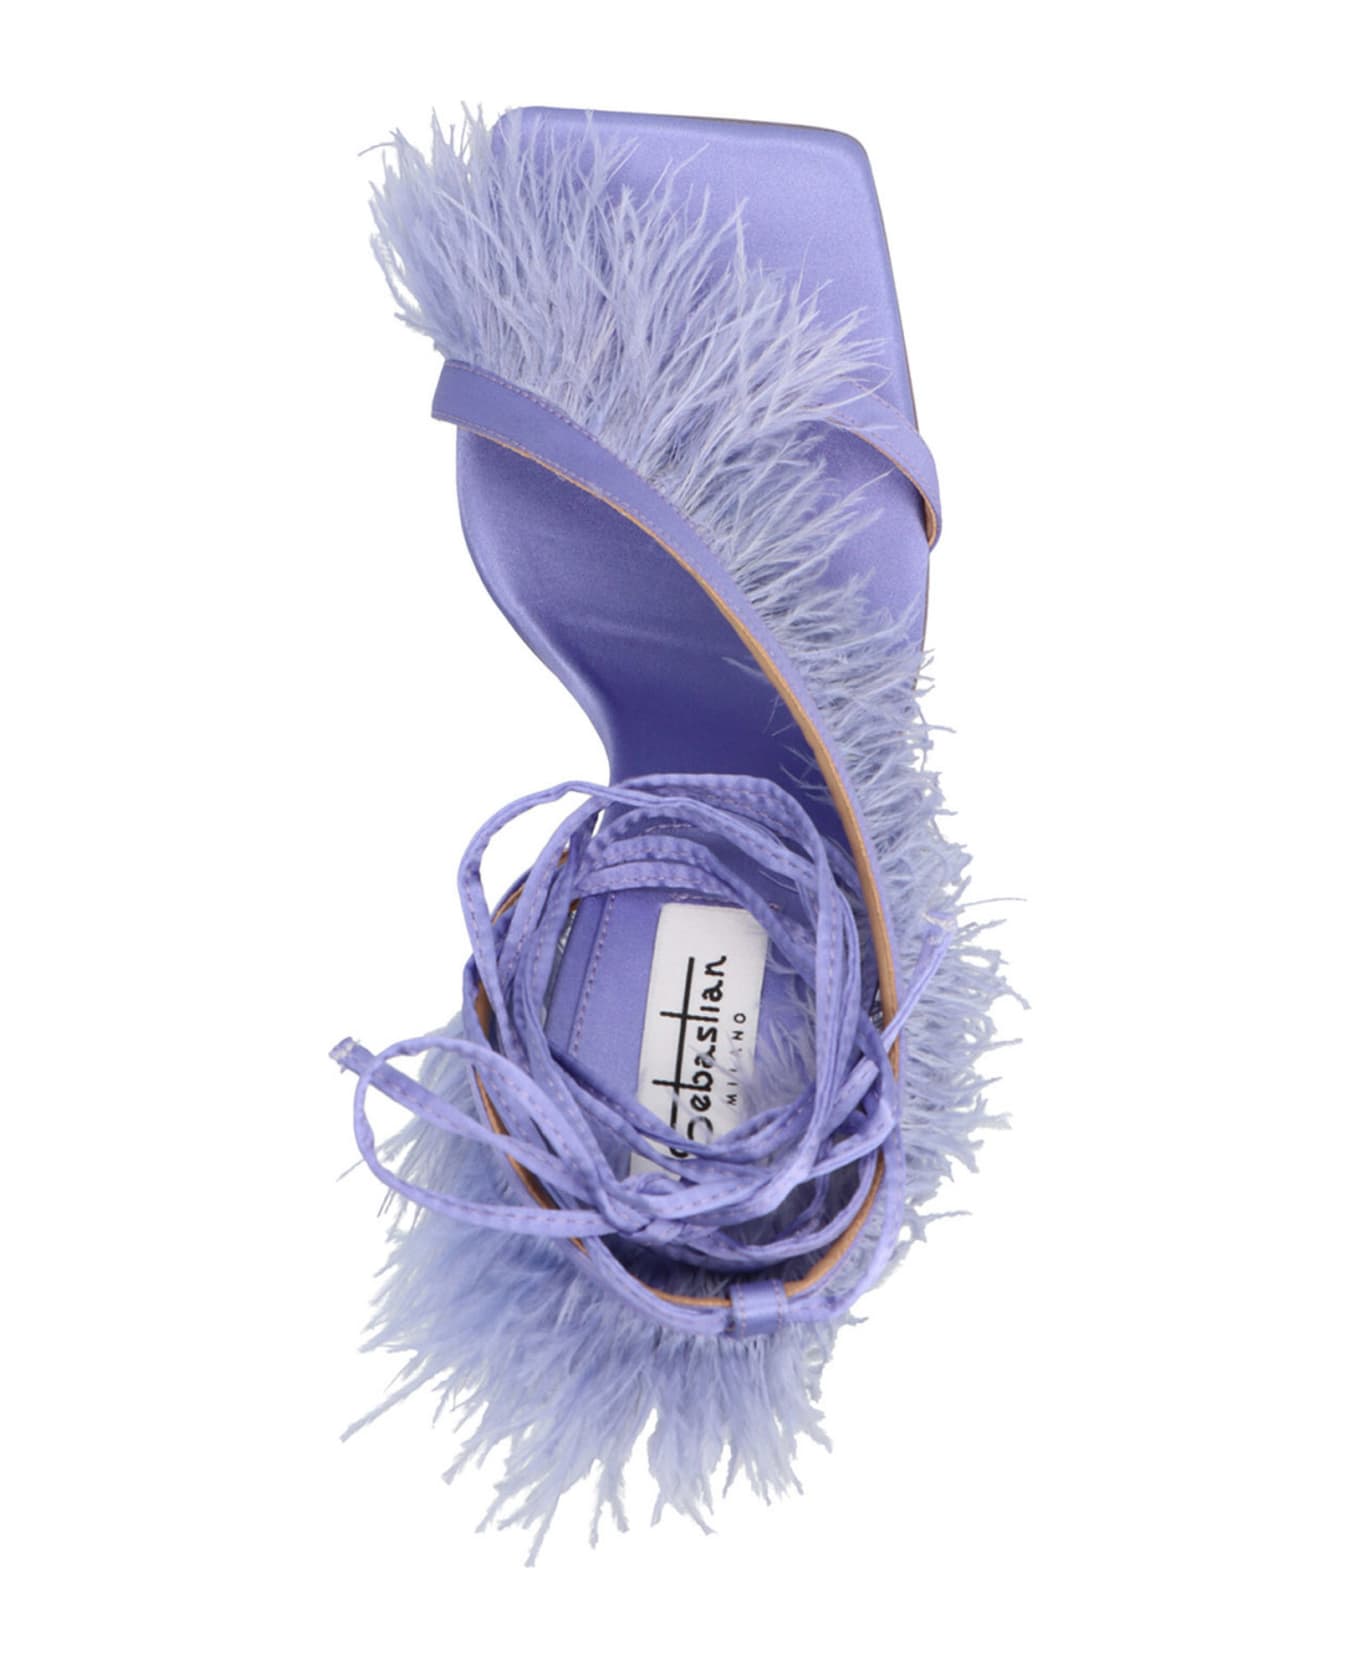 Sebastian Milano 'feather Wrap Sandals - Purple